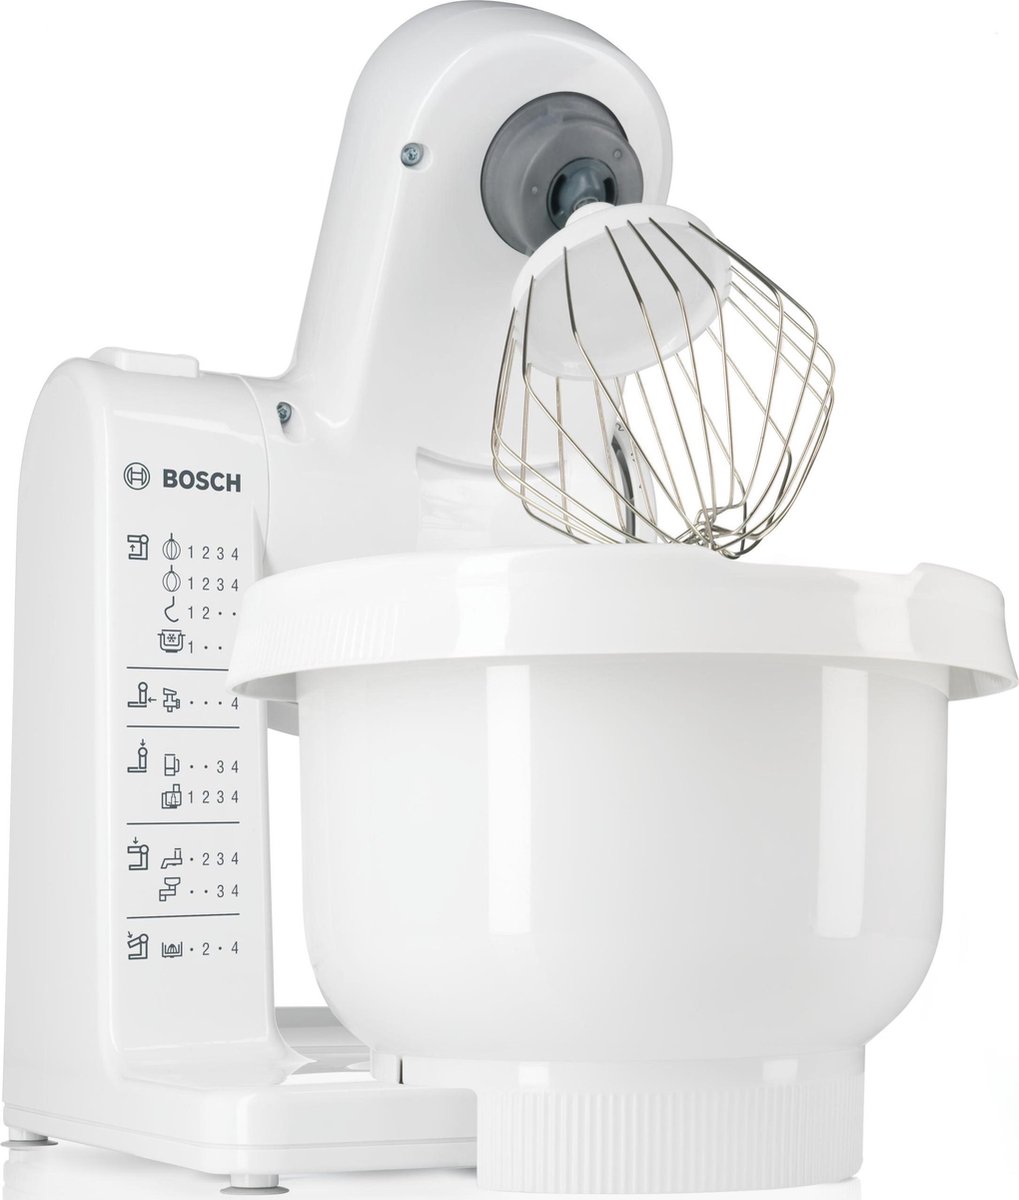 Noord ongezond component Bosch-MUM-4405-Profimixx-44-keukenmachine | bol.com